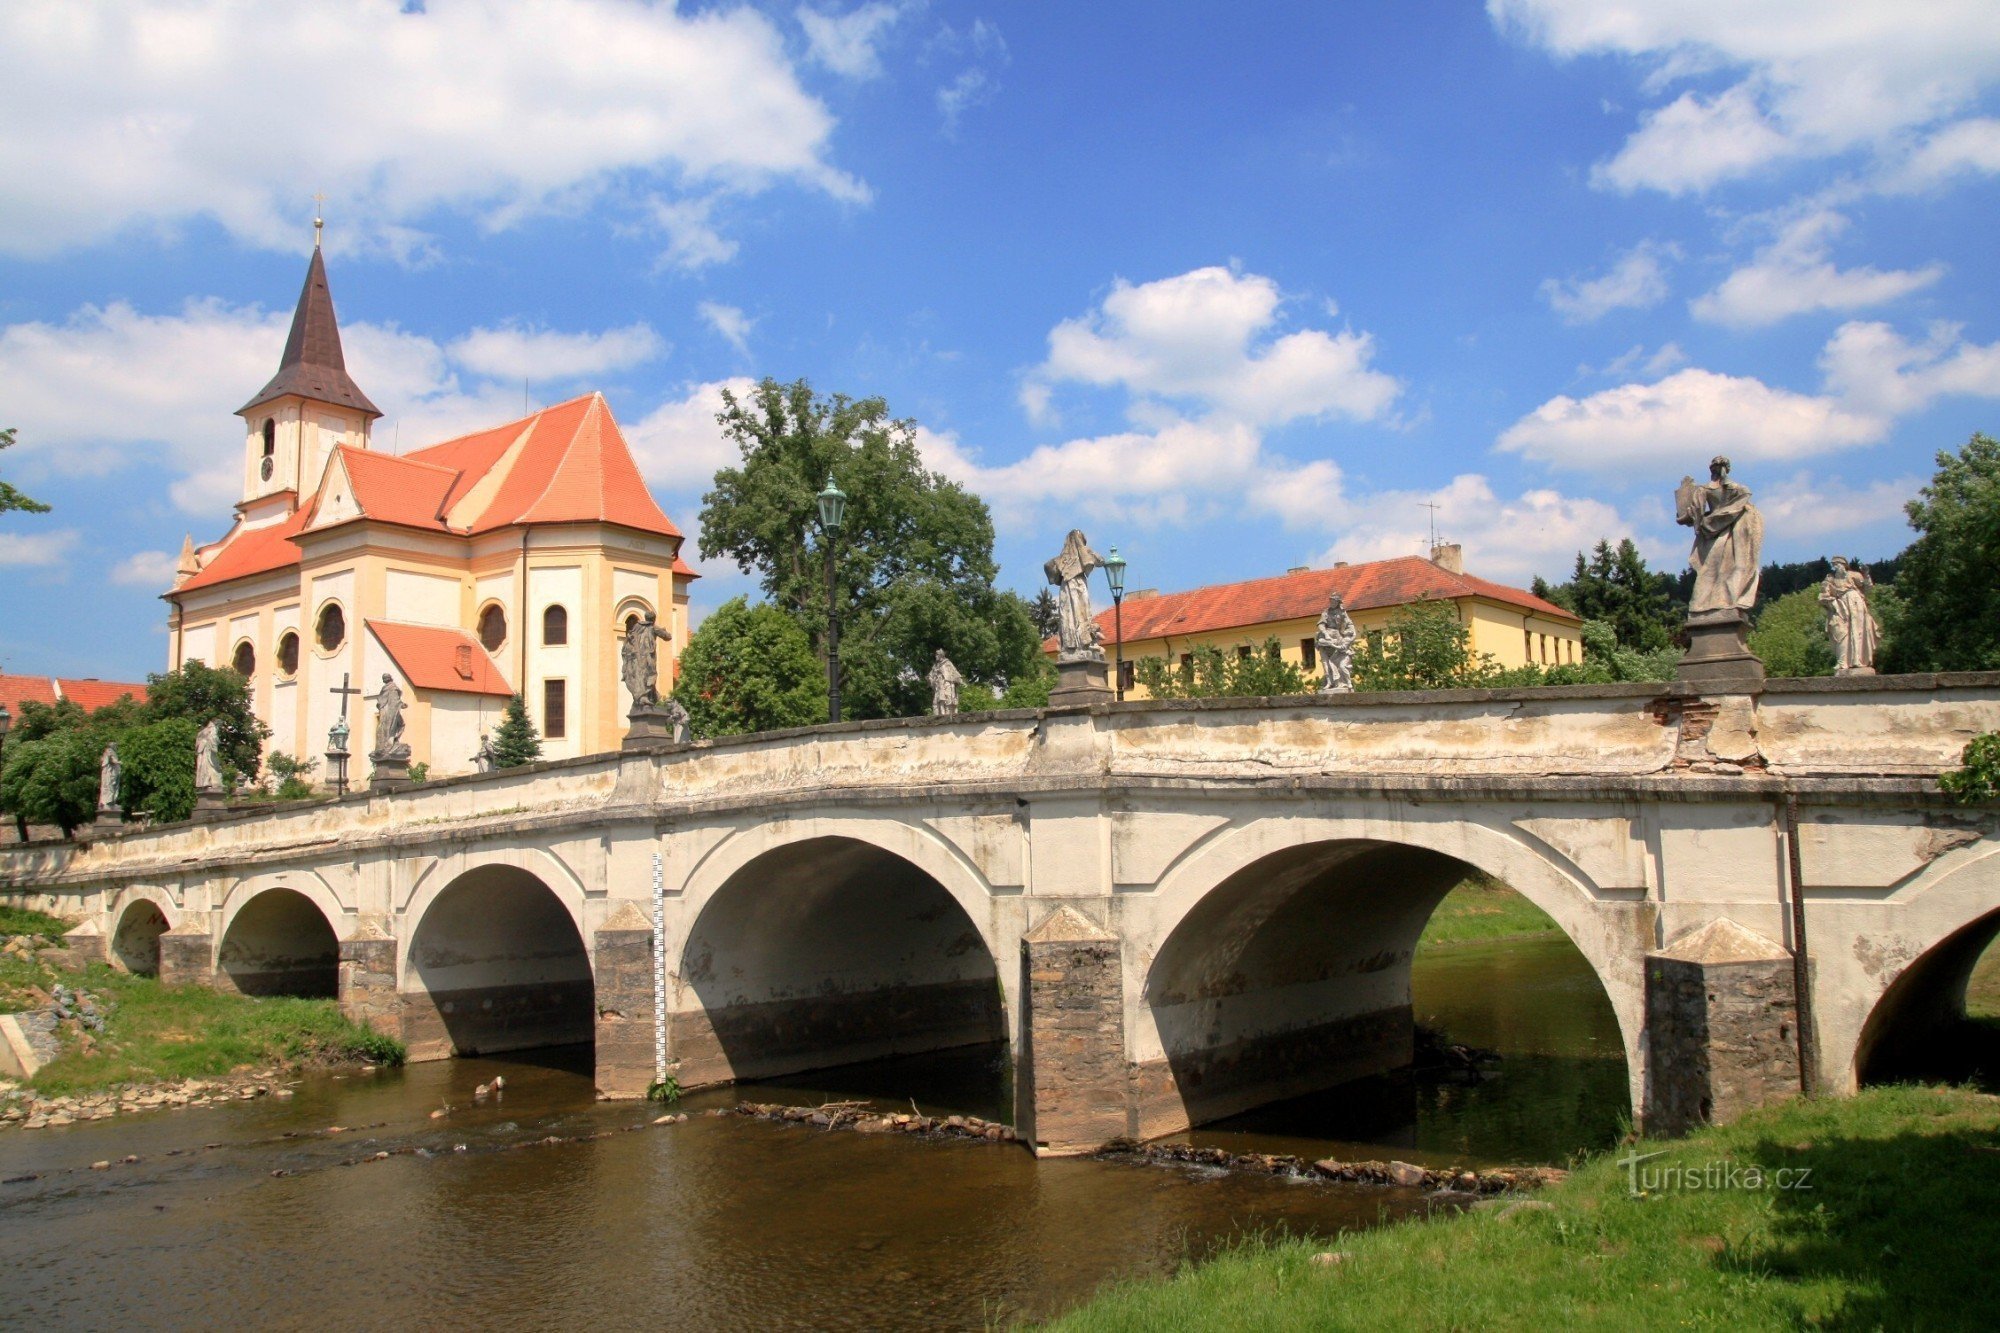 Náměšť nad Oslavou - pod de piatră în stil baroc 2011